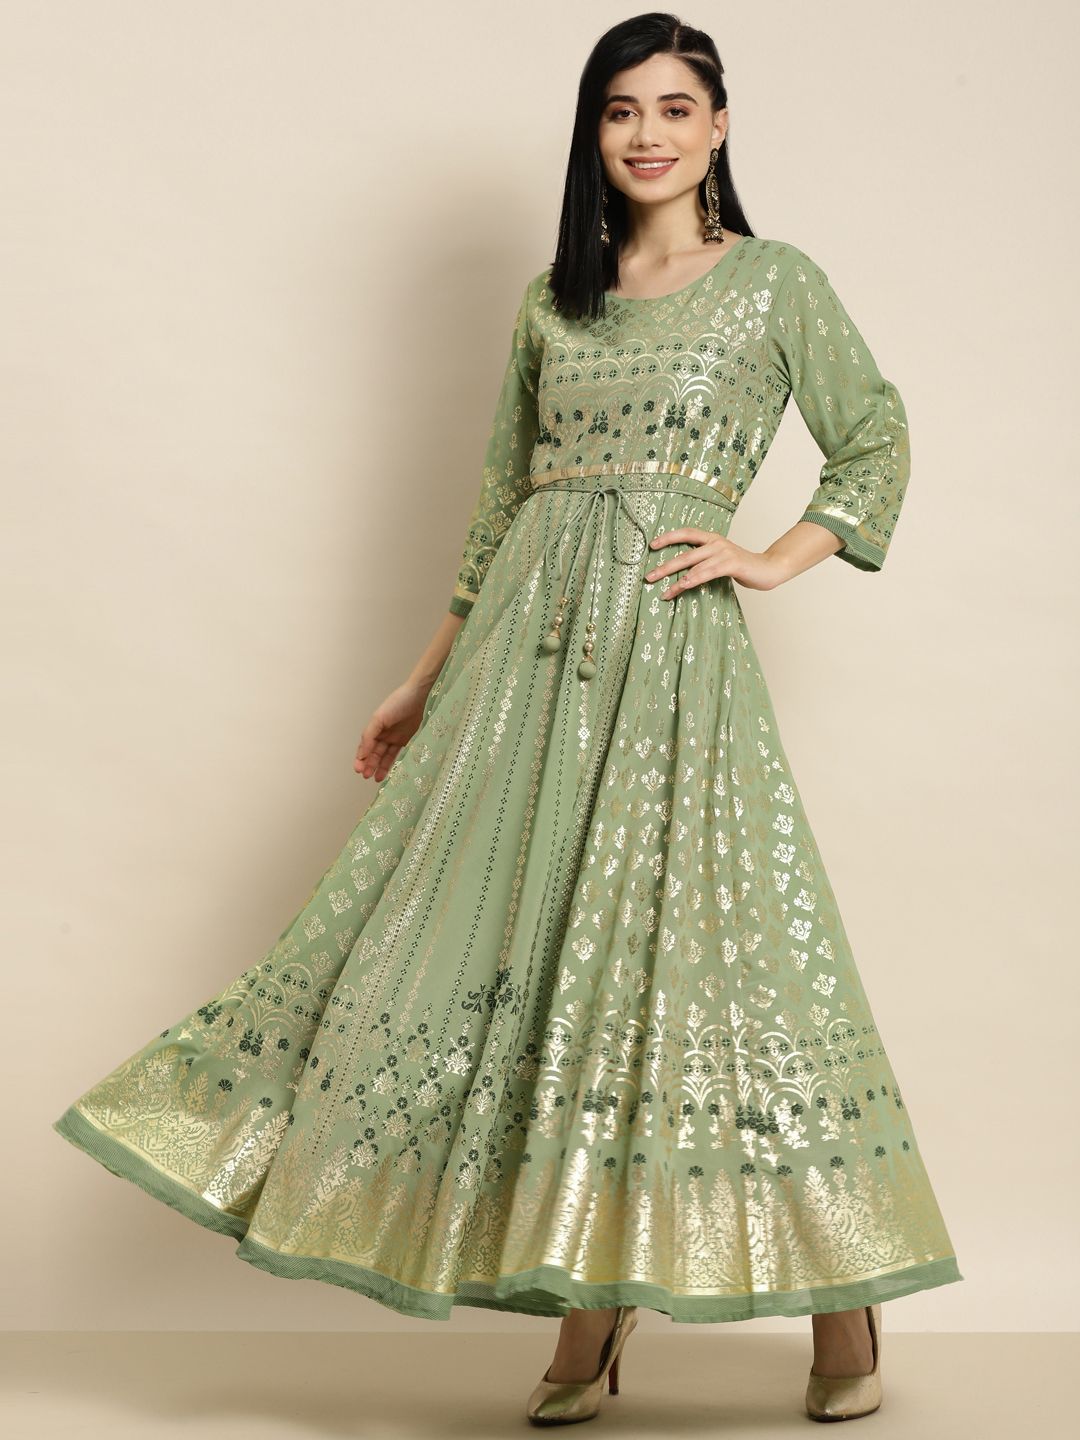 Juniper Sage Green Foil Printed Flared Ethnic Dress Price in India